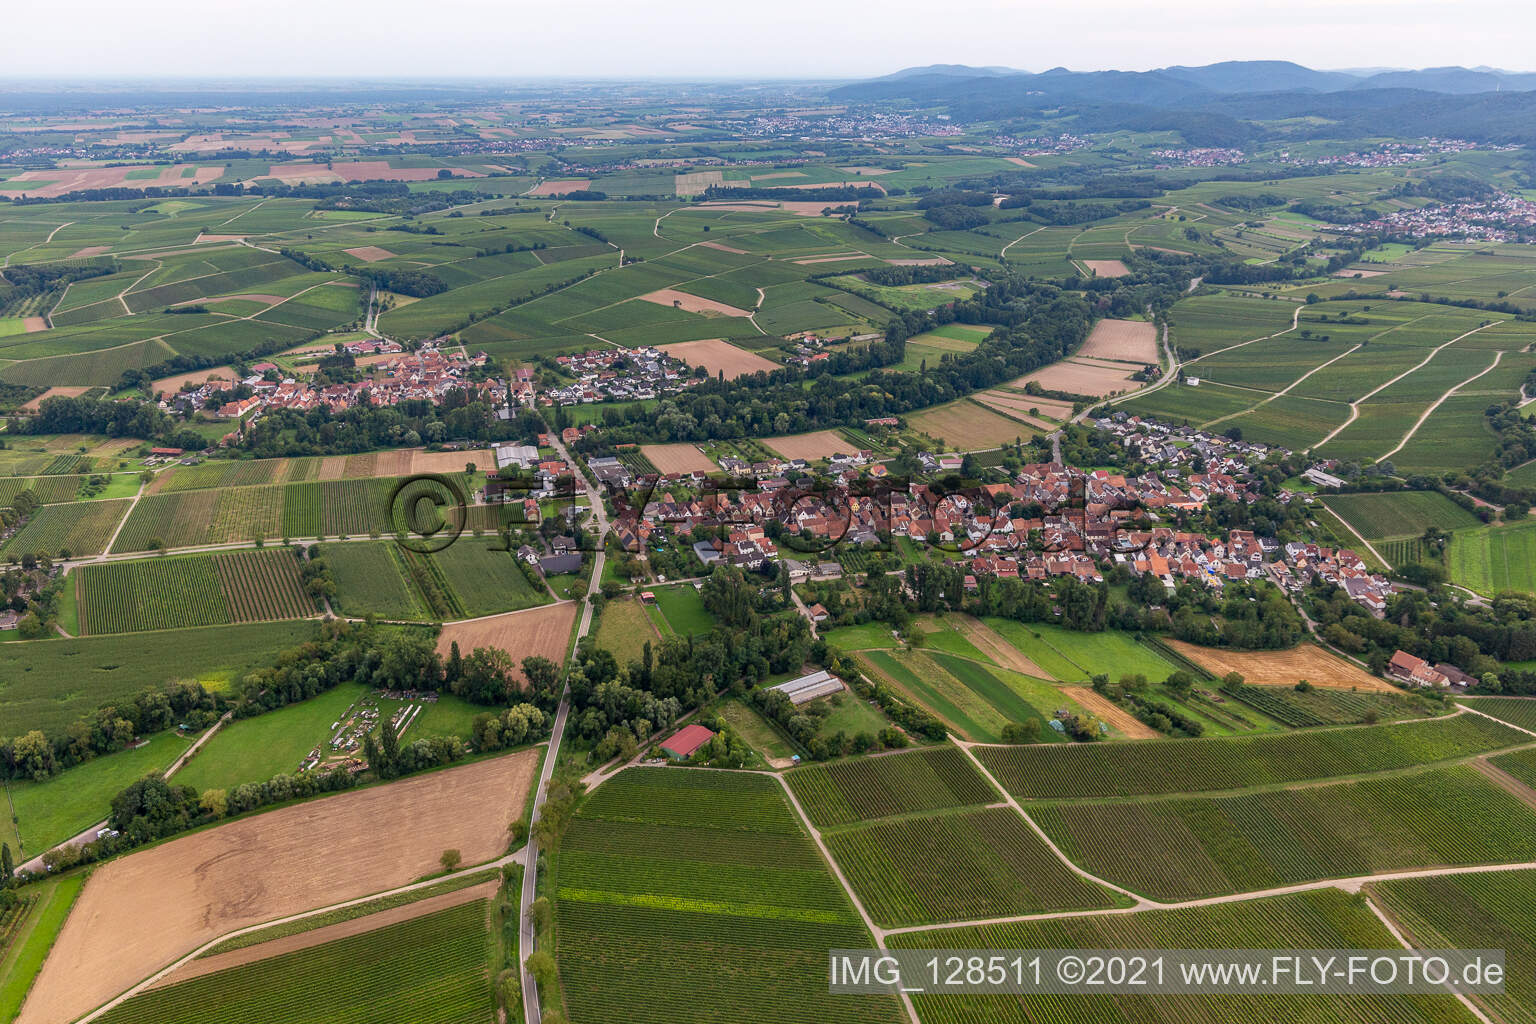 Enregistrement par drone de Quartier Heuchelheim in Heuchelheim-Klingen dans le département Rhénanie-Palatinat, Allemagne